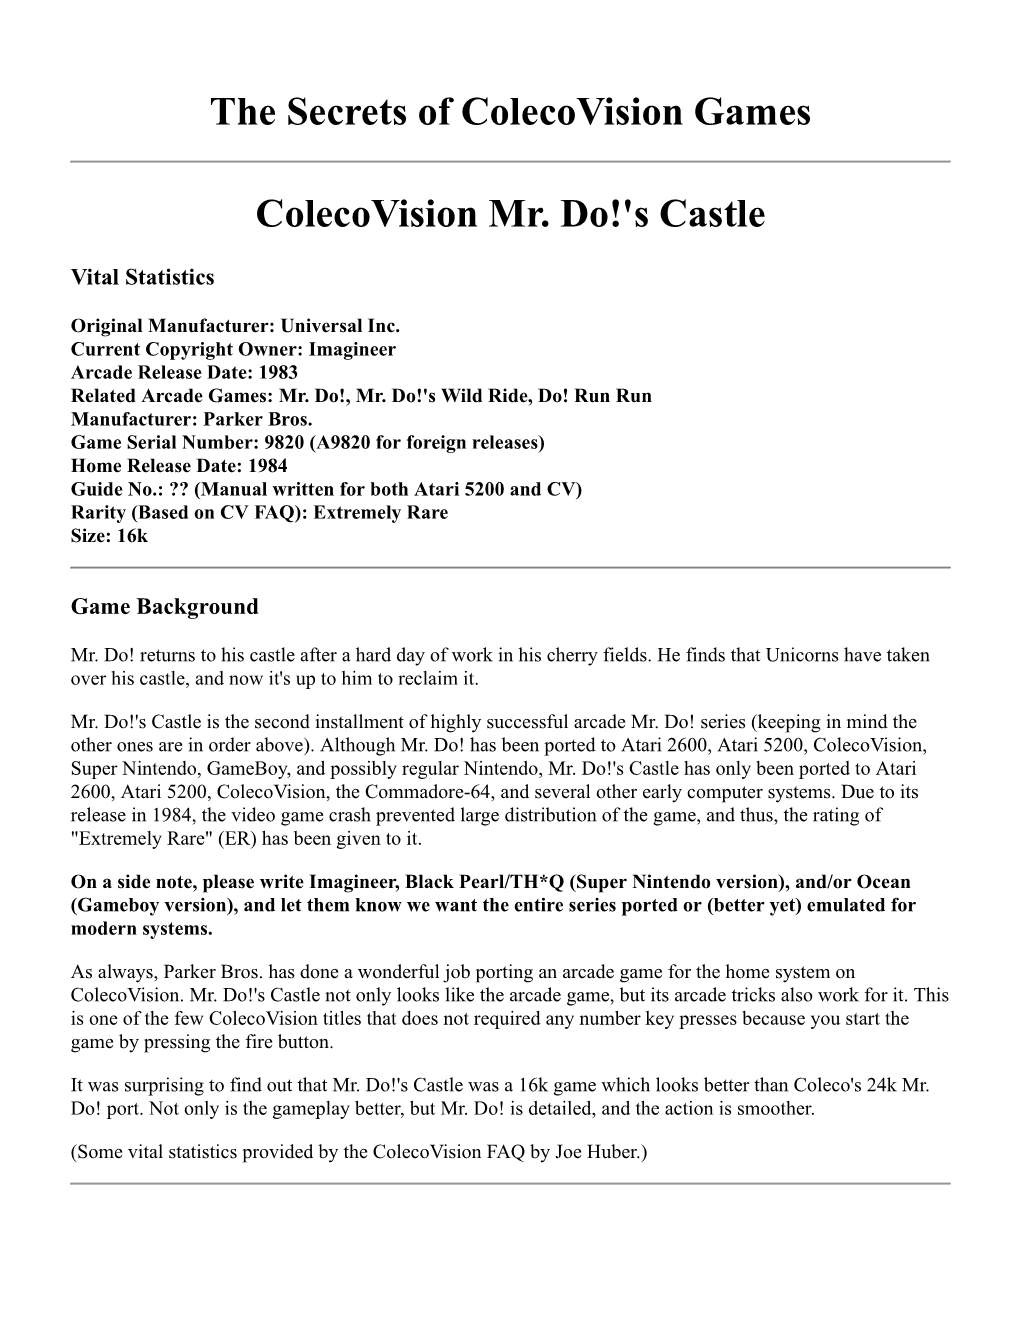 Colecovision Game Spotlight: Mr. Do!'S Castle